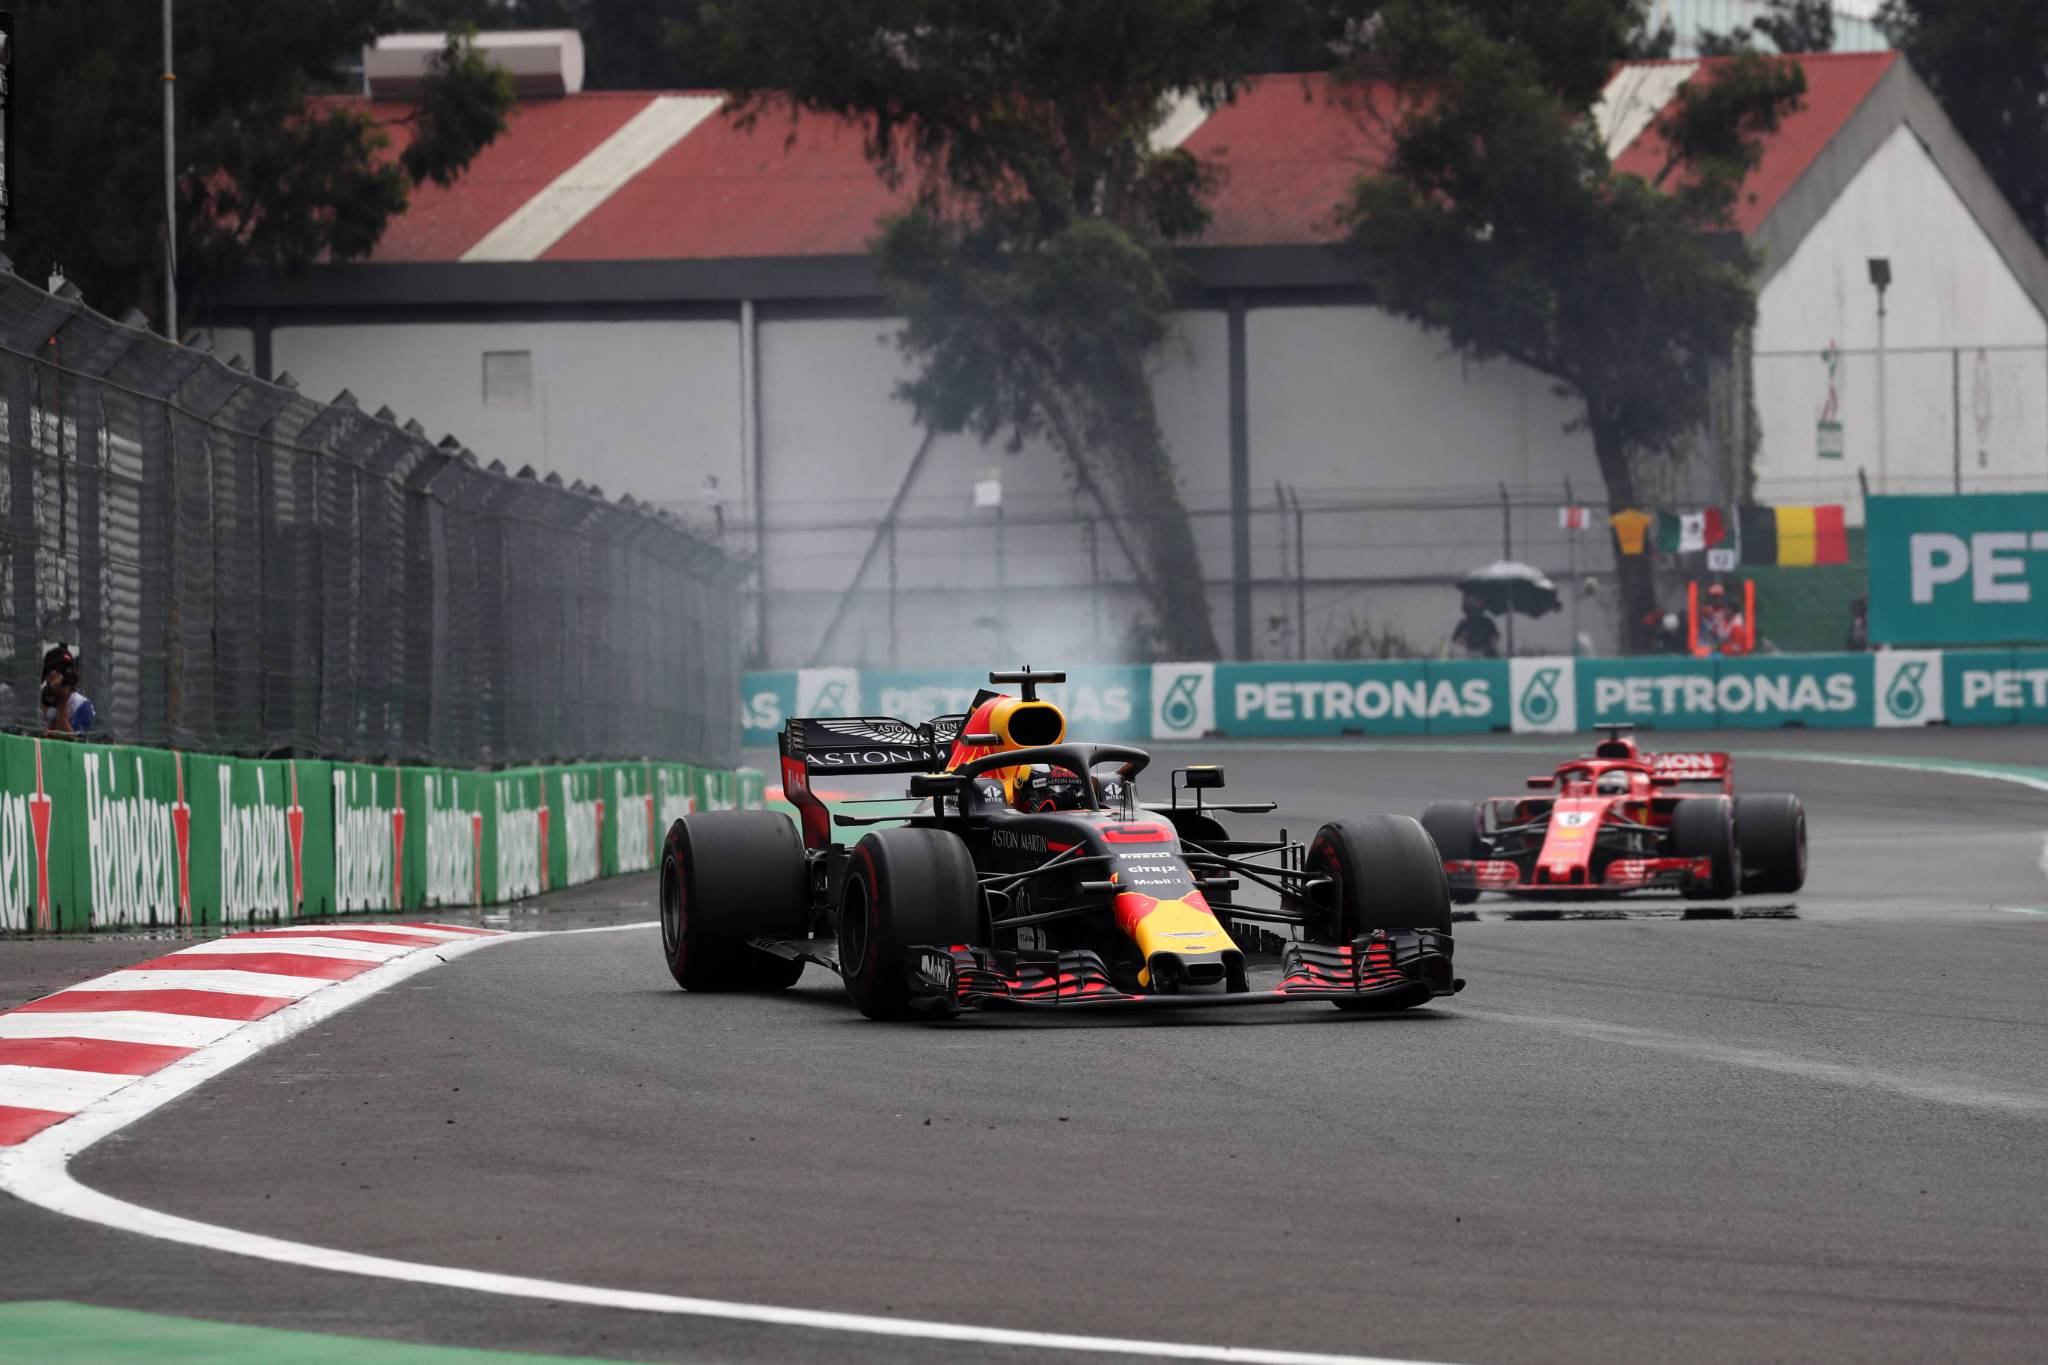 28.10.2018 - Race, Daniel Ricciardo (AUS) Red Bull Racing RB14 retires from the race 